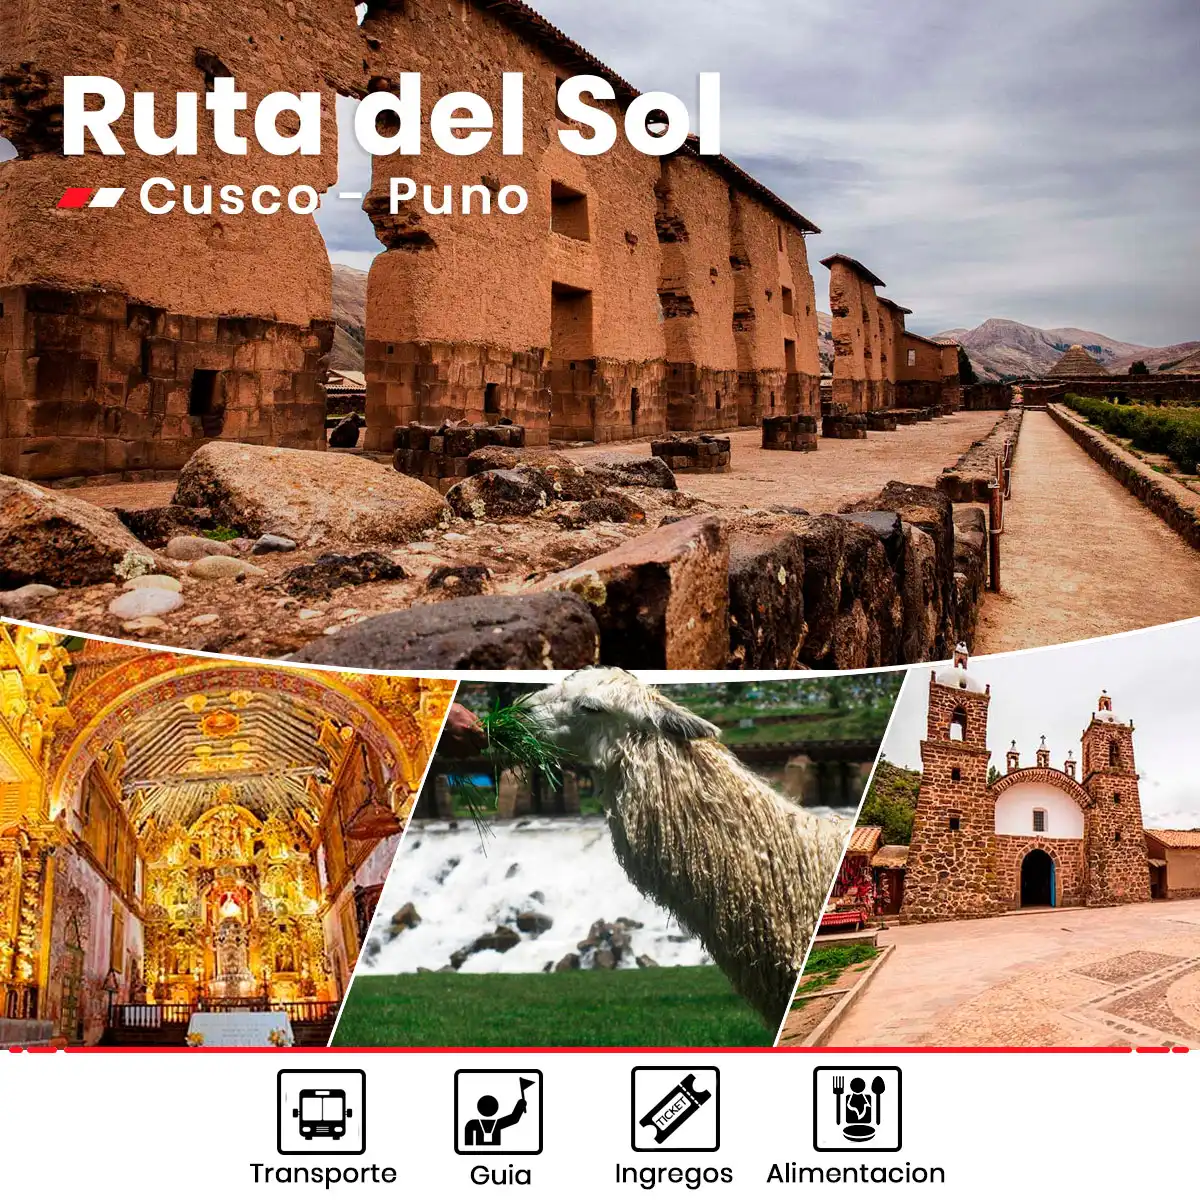 Ruta del sol Cusco-Puno wa.me/51964265060